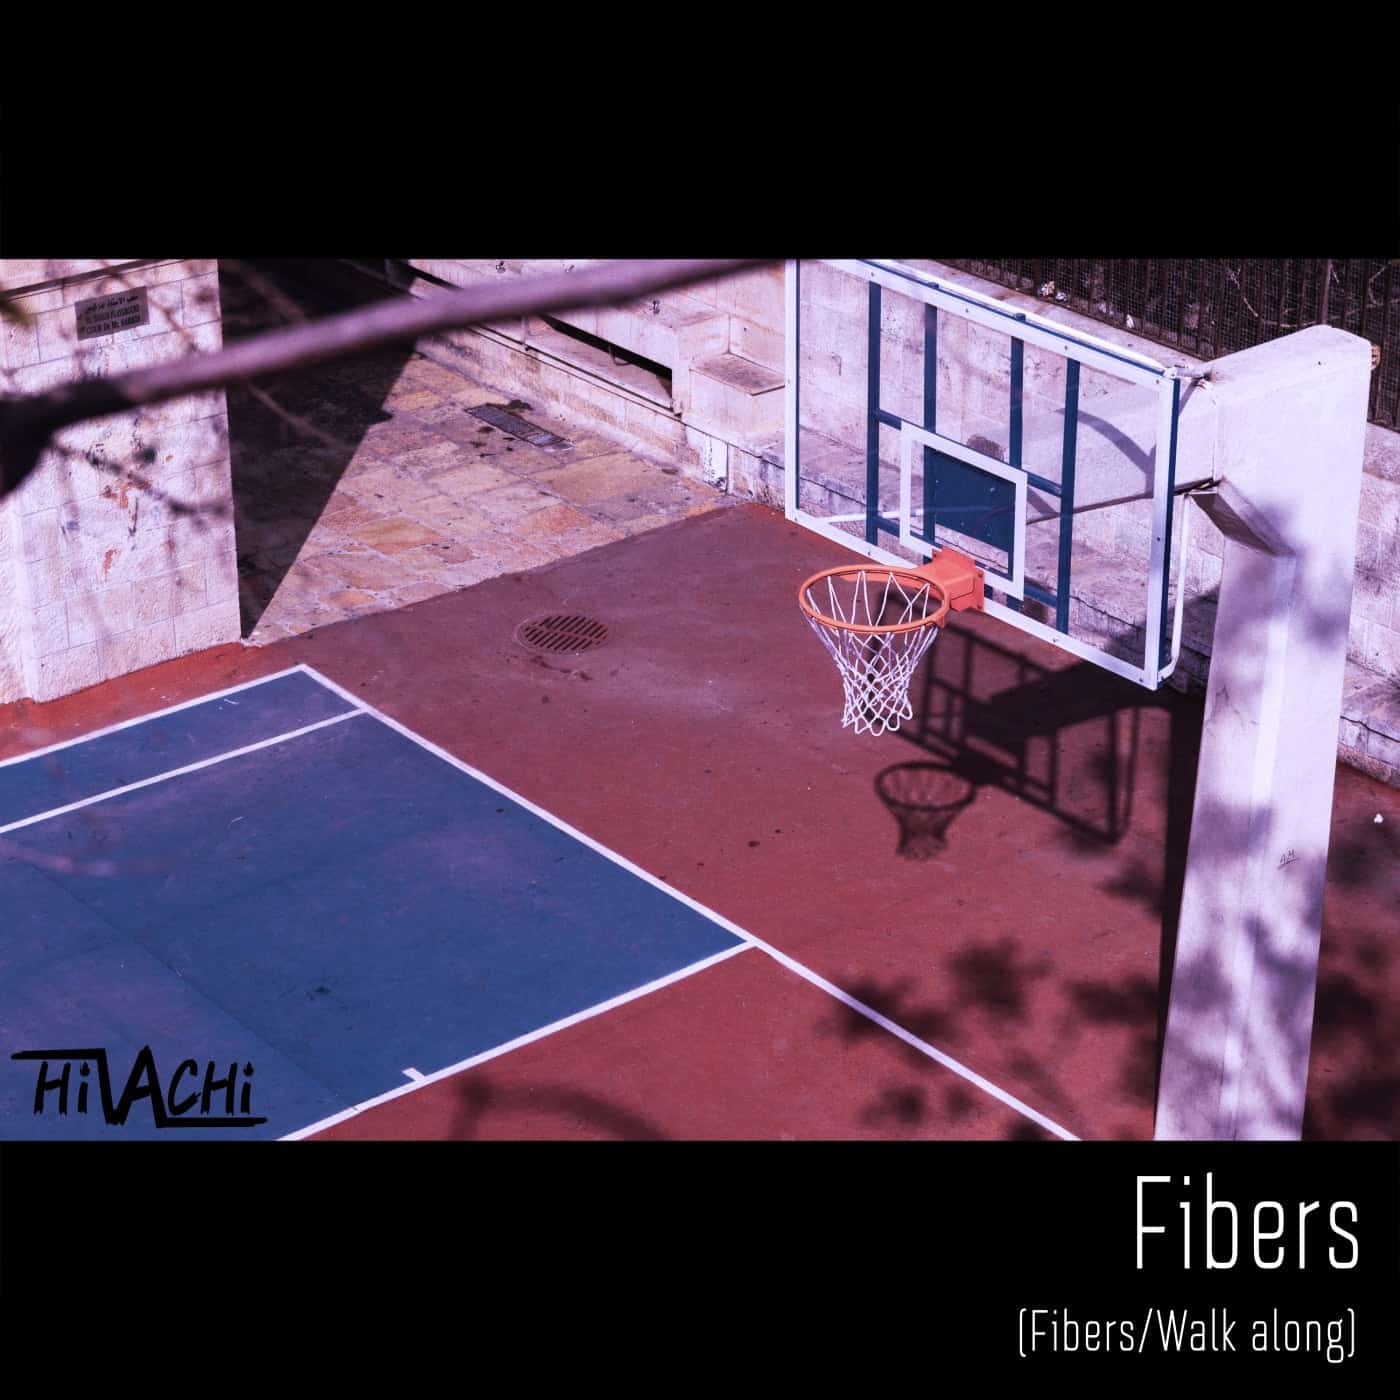 HiVACHi “Fibers” released